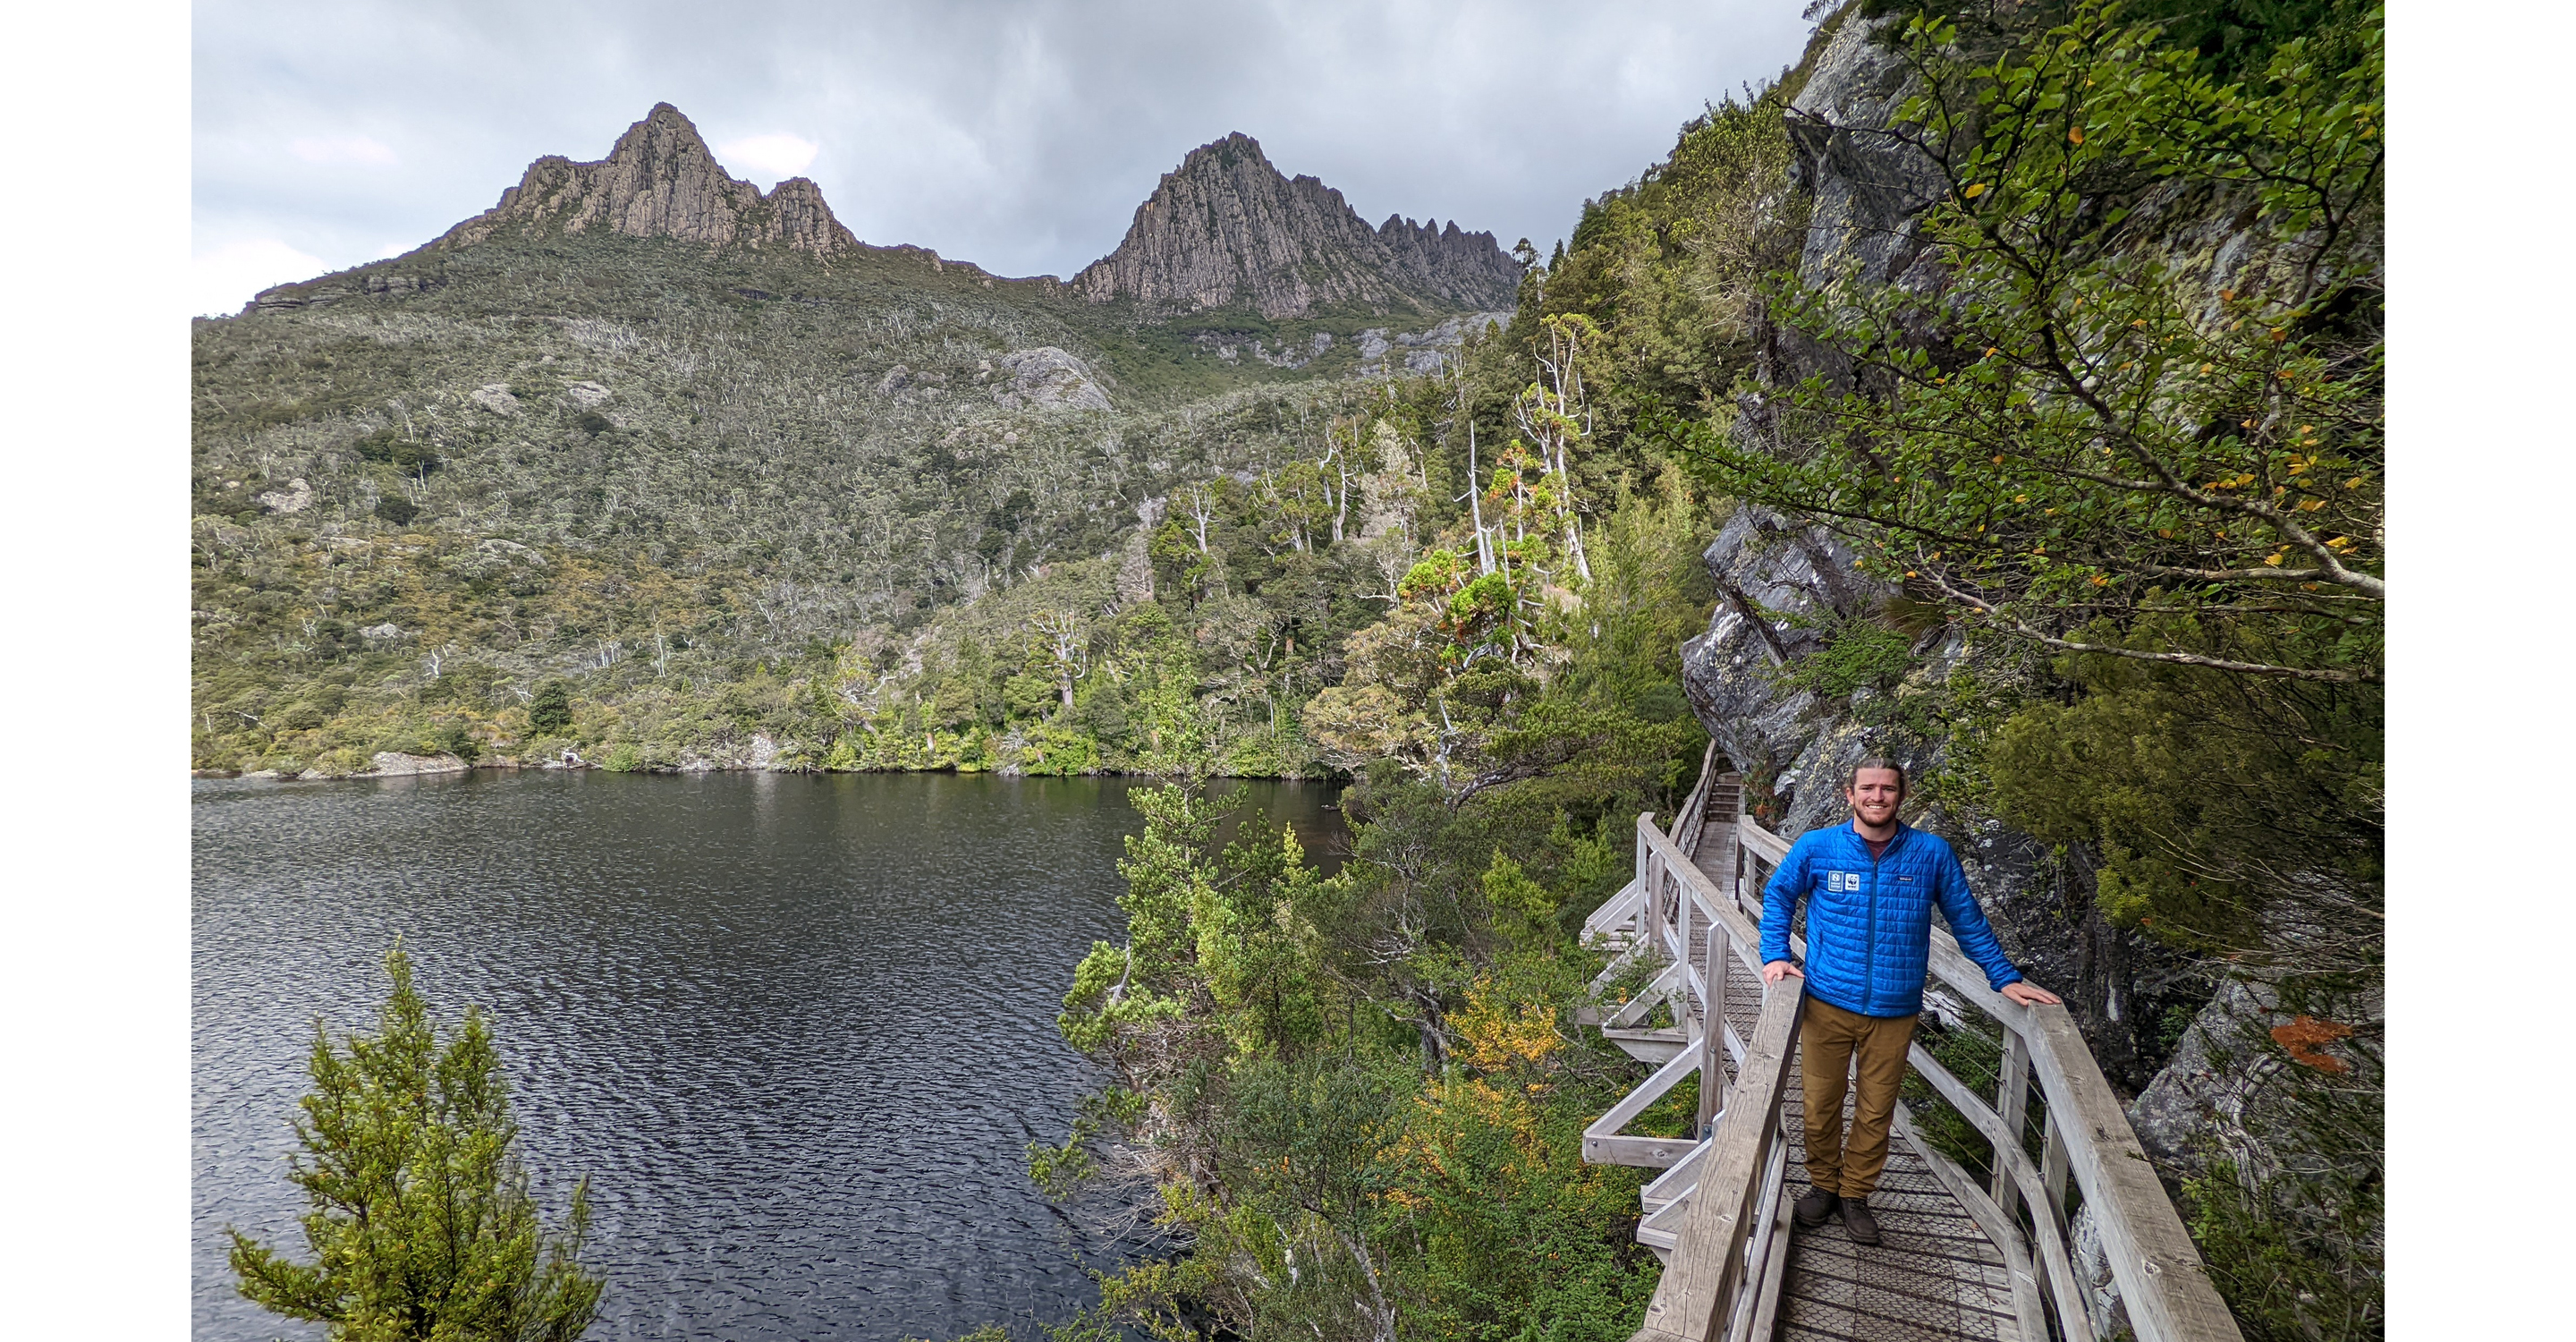 Exploring the sites in Cradle Mountain National Park, Tasmania.